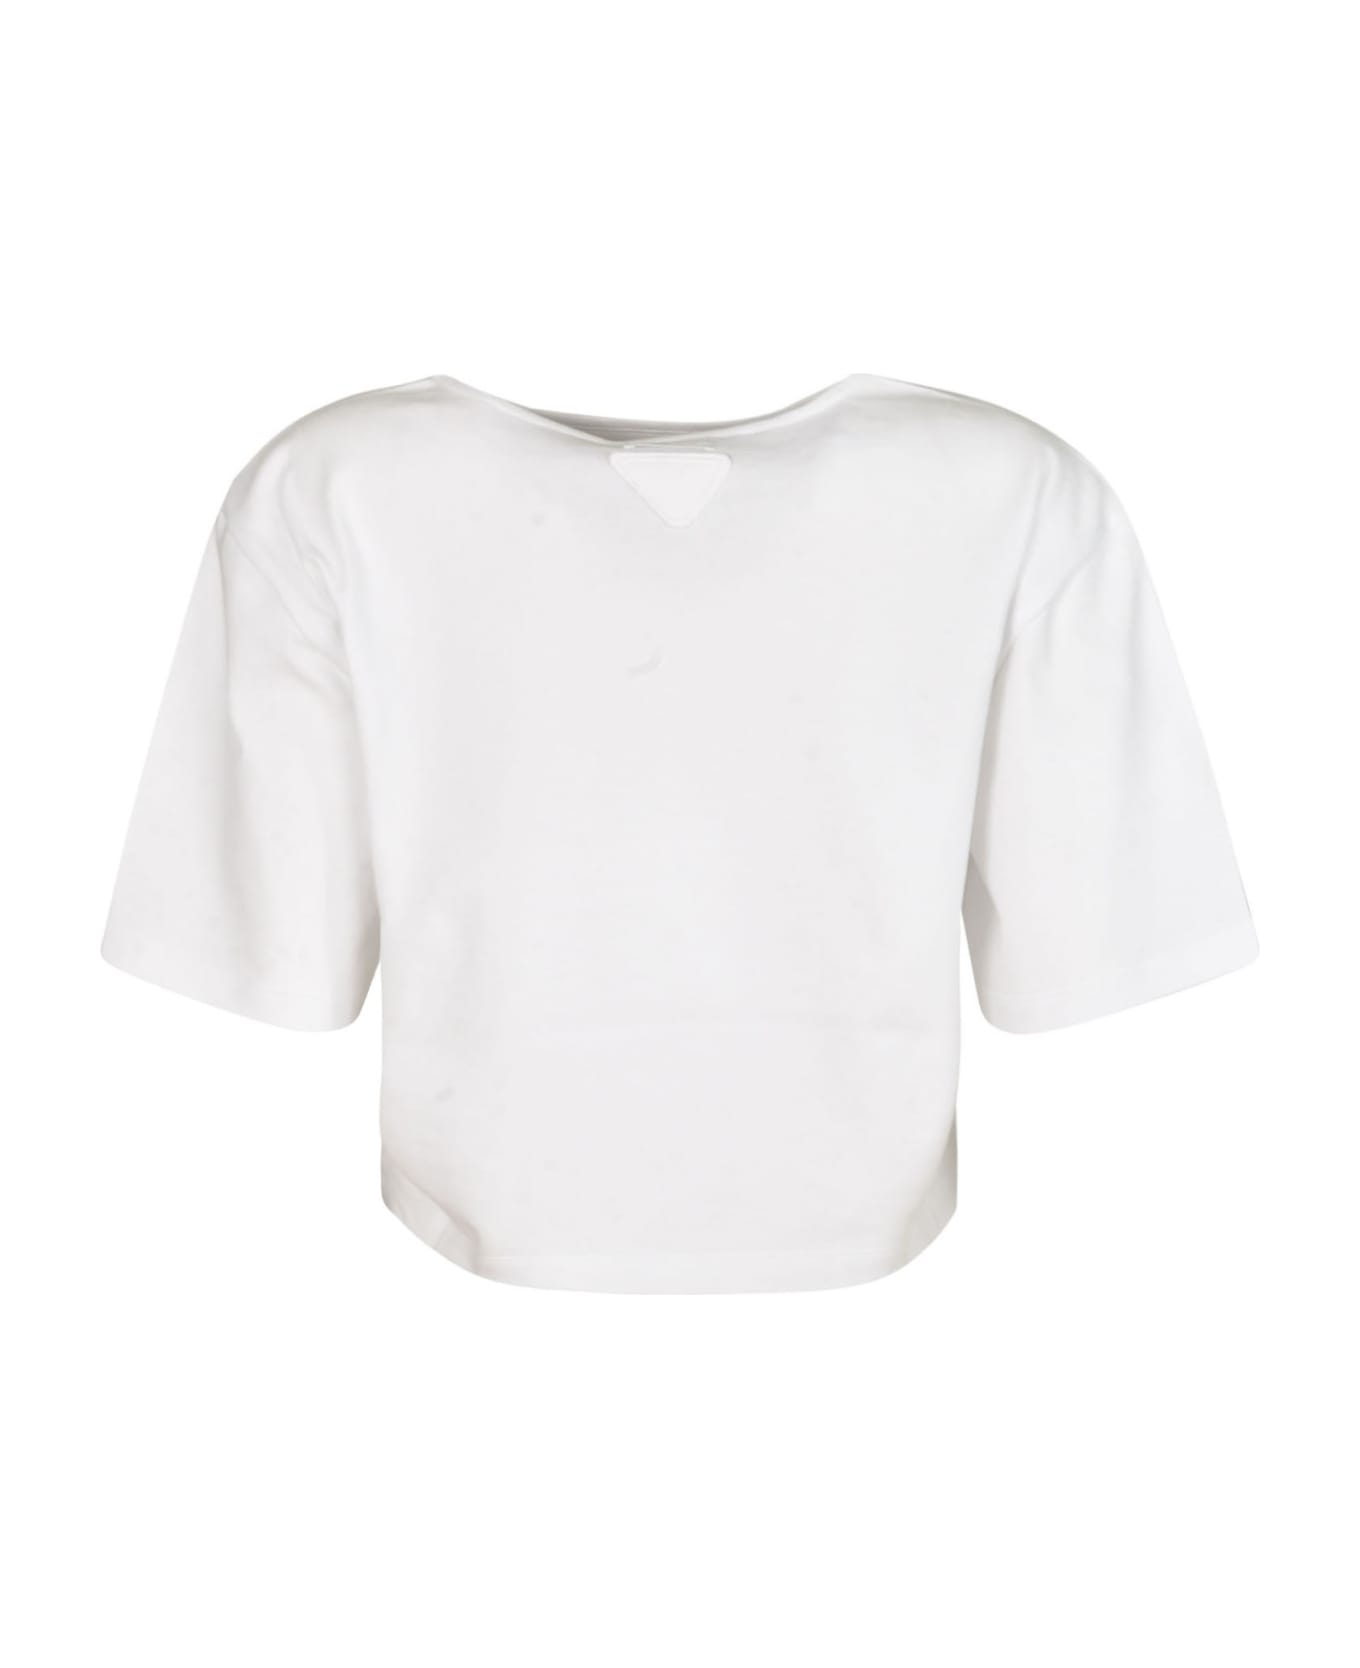 Prada Logo Cropped T-shirt - White